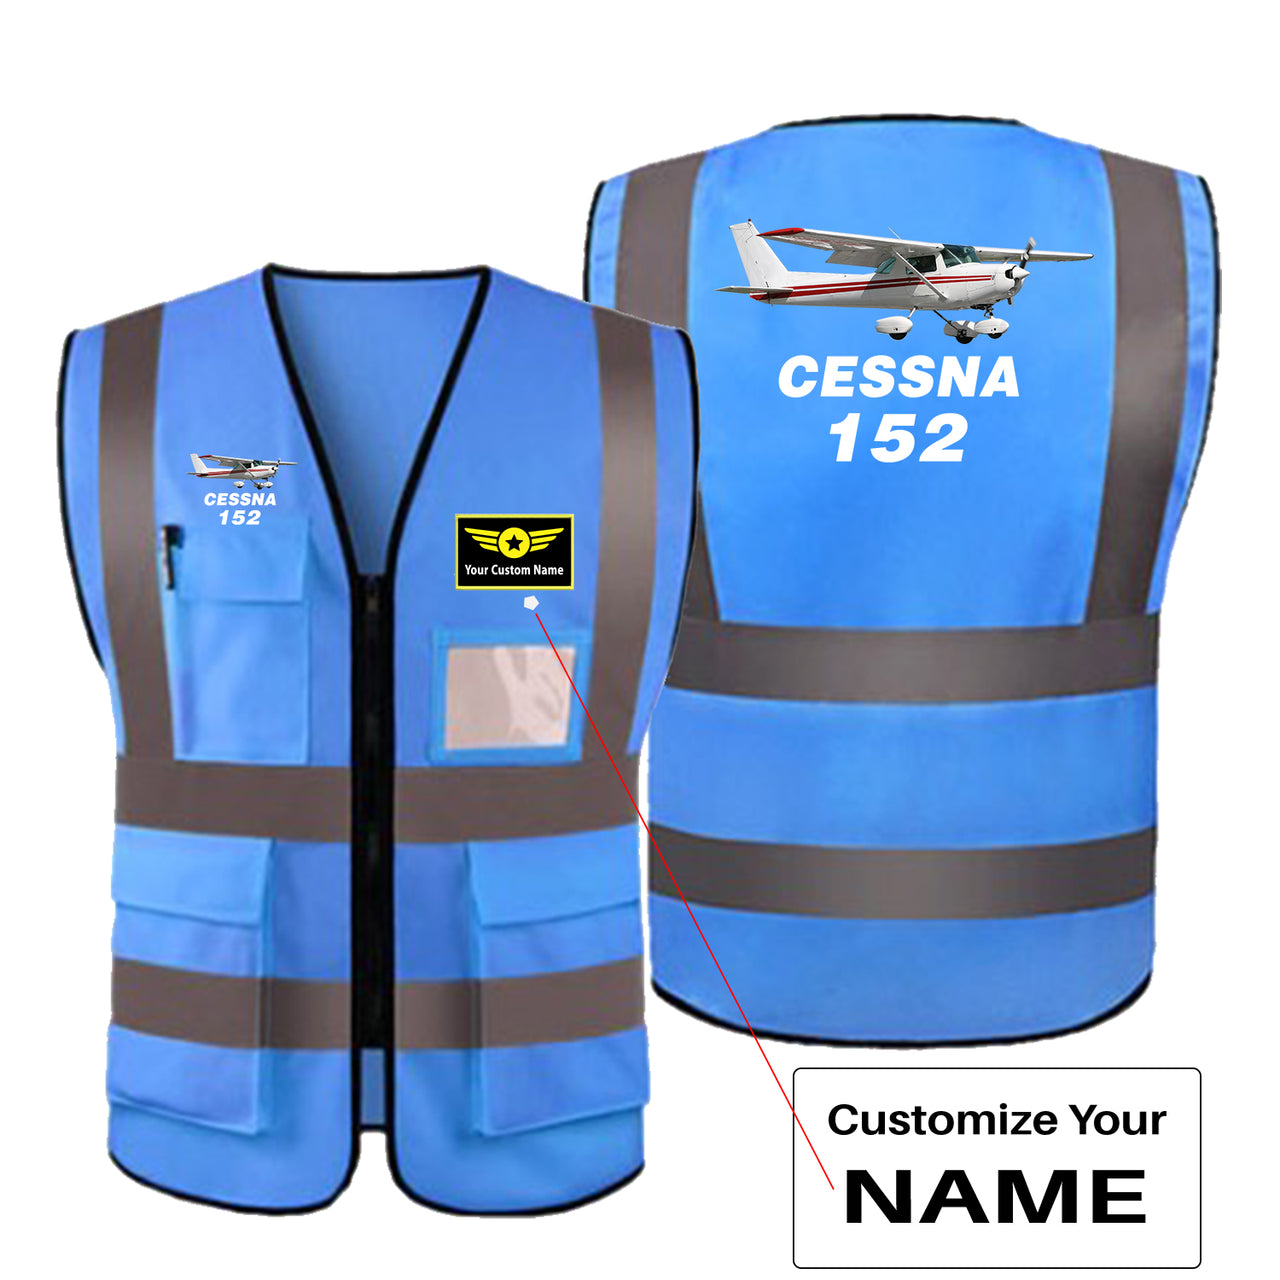 The Cessna 152 Designed Reflective Vests